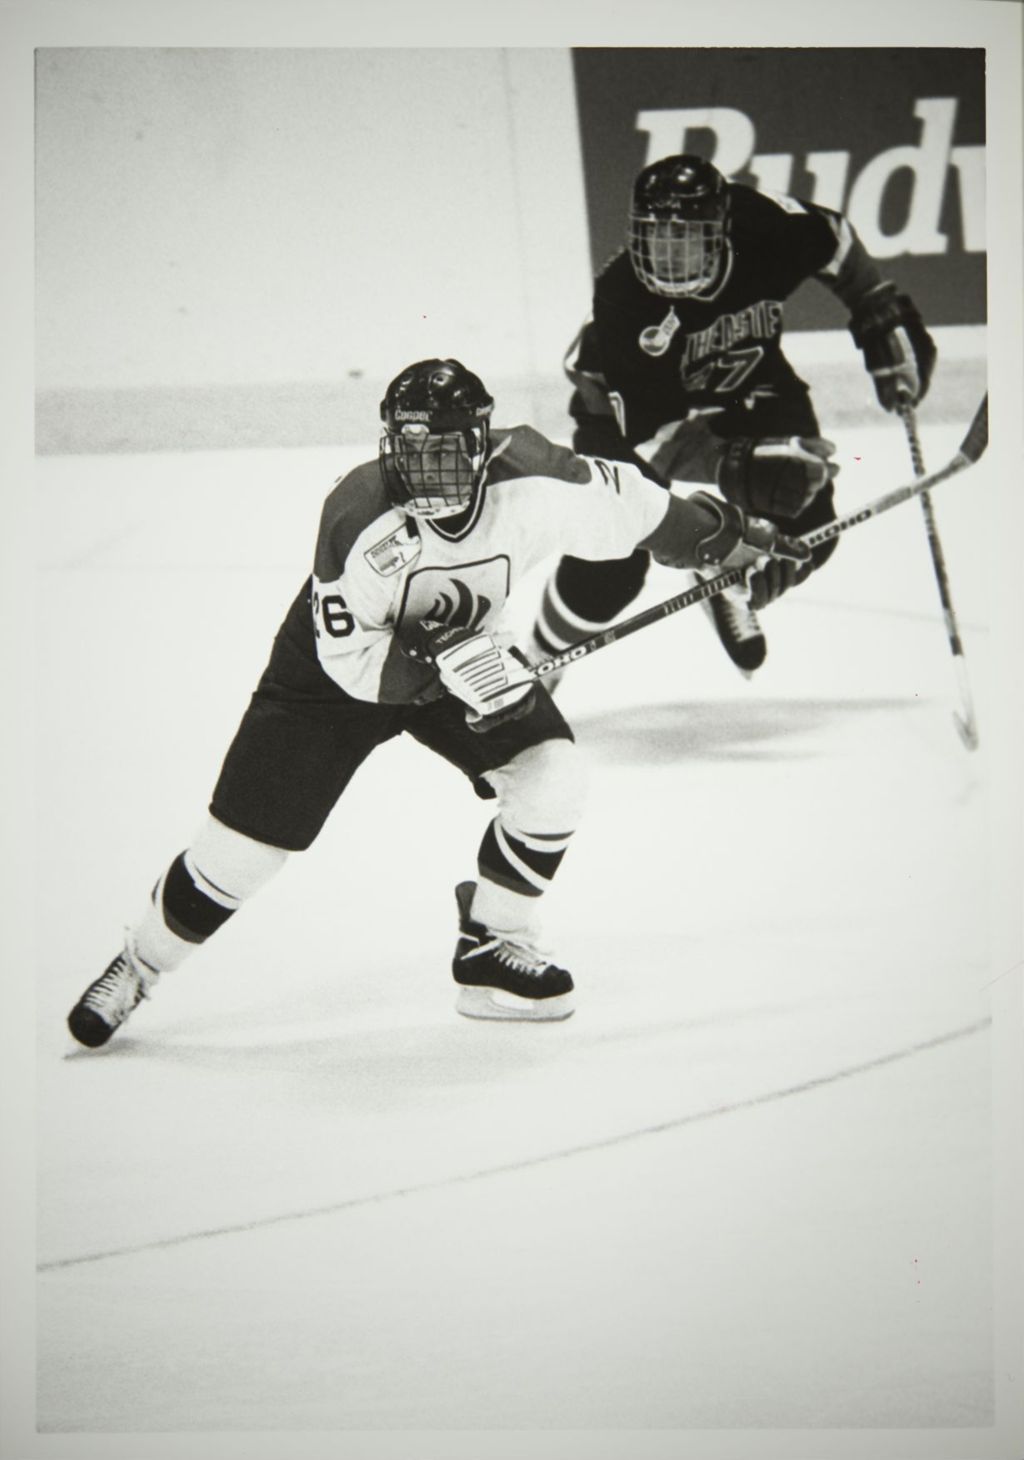 Miniature of Hockey game against Northeastern University